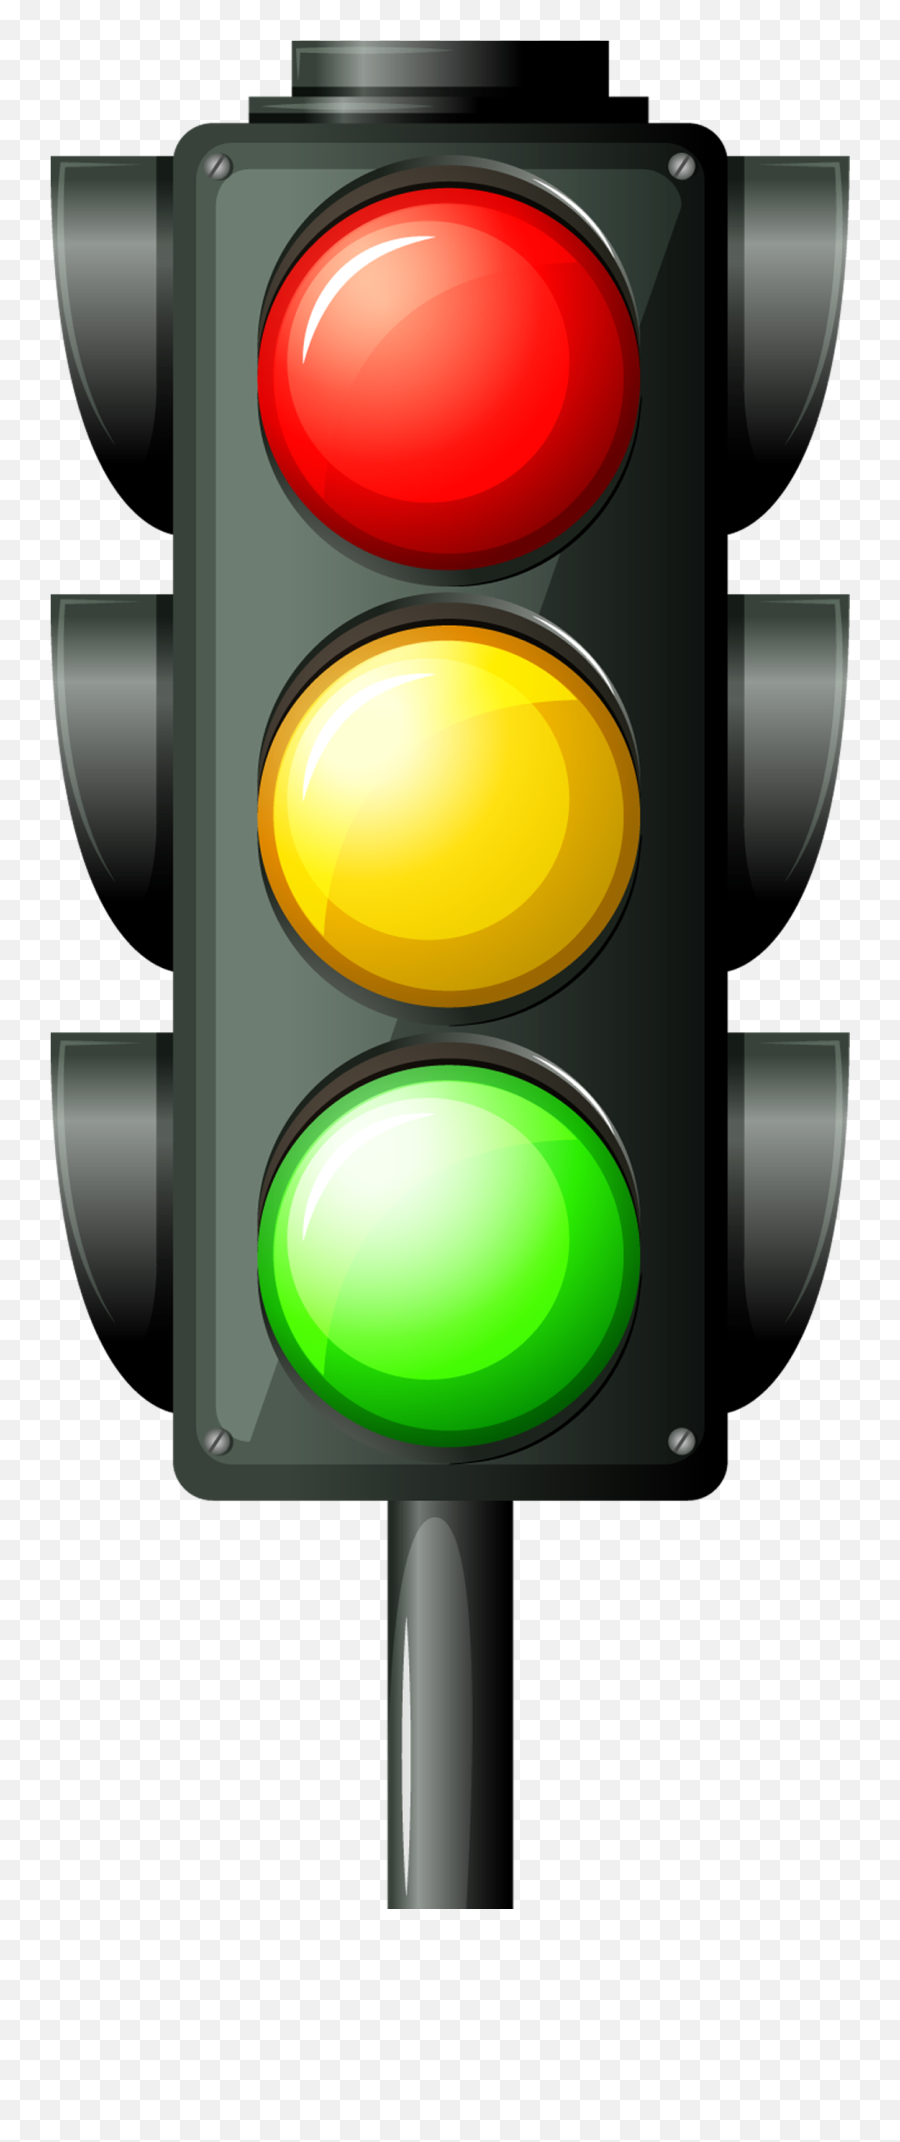 Traffic Light Png Images Free Download - Traffic Light Png,Traffic Light Png